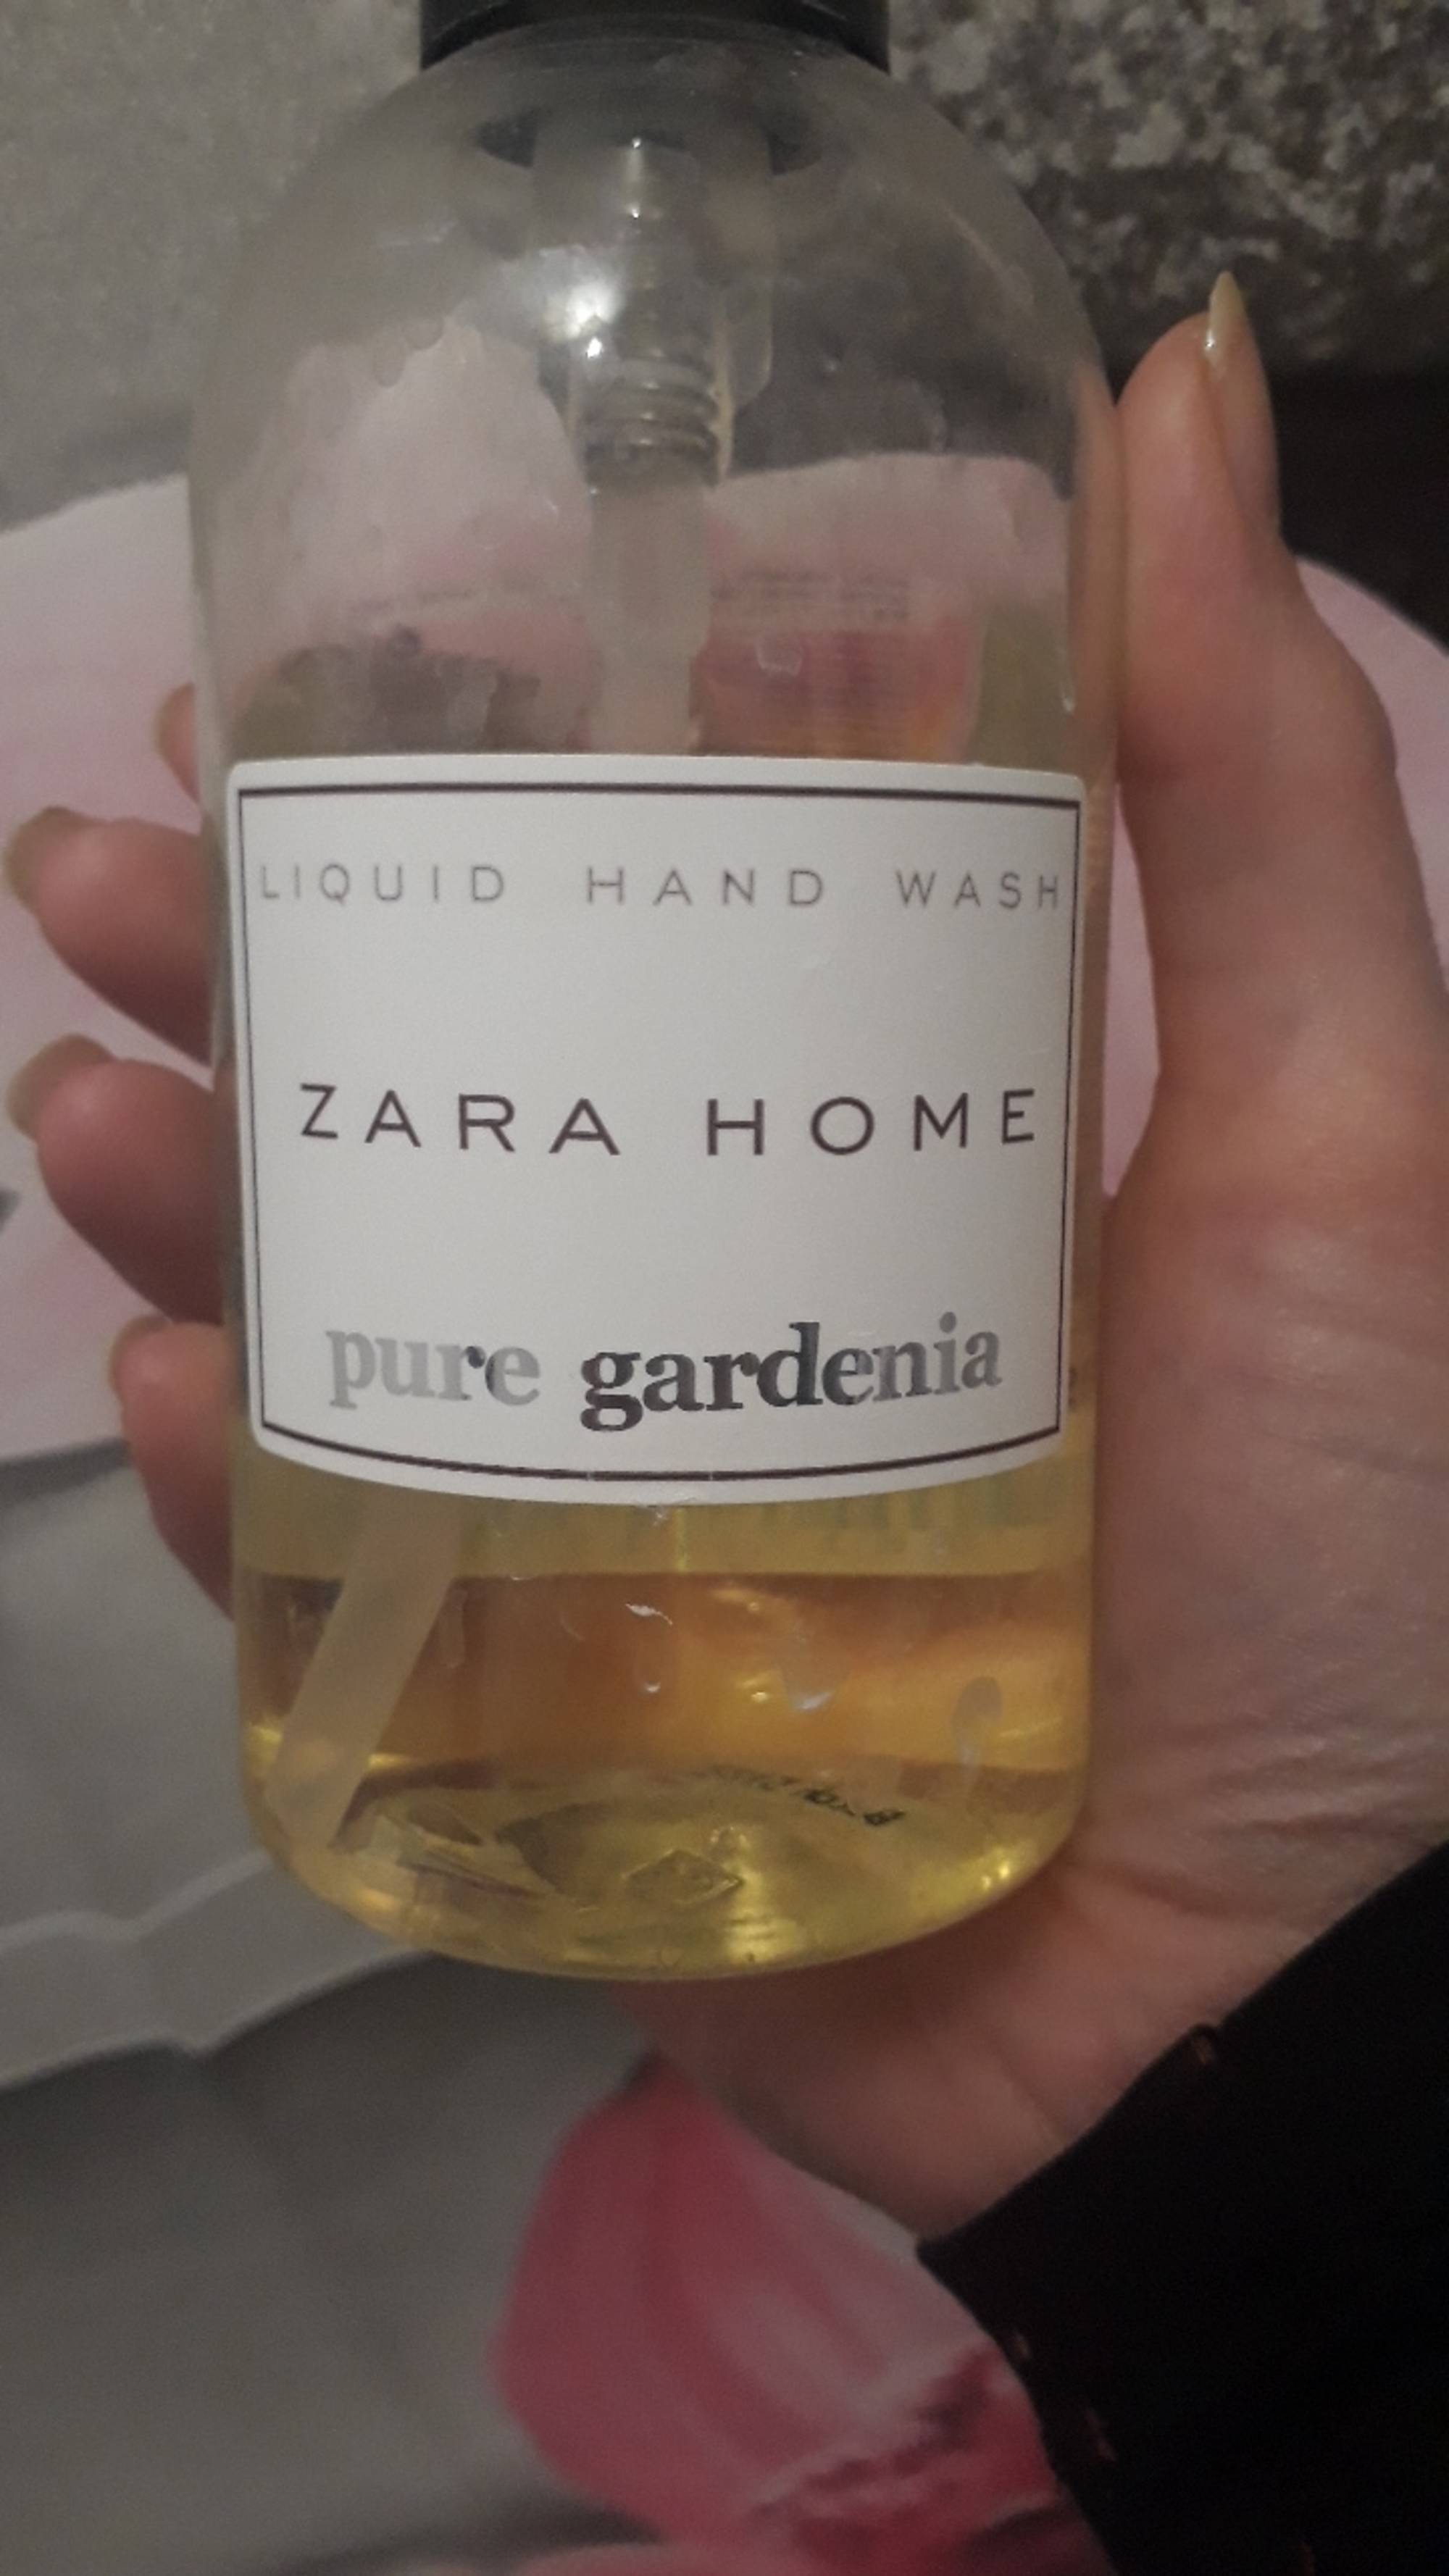 ZARA HOME - Pure gardenia - Liquid hand wash